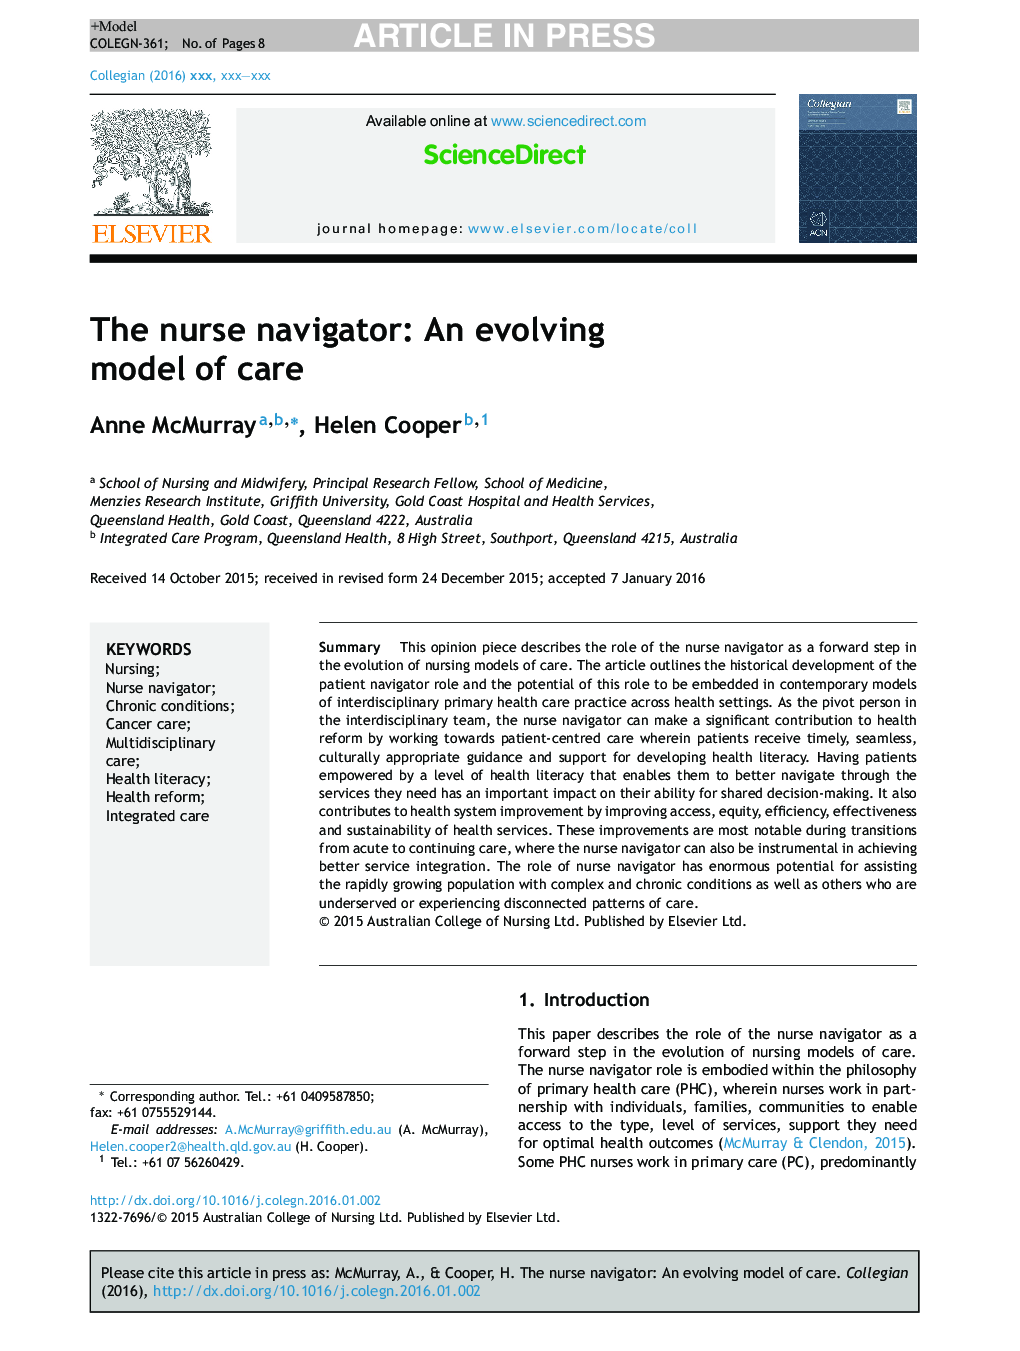 The nurse navigator: An evolving model of care